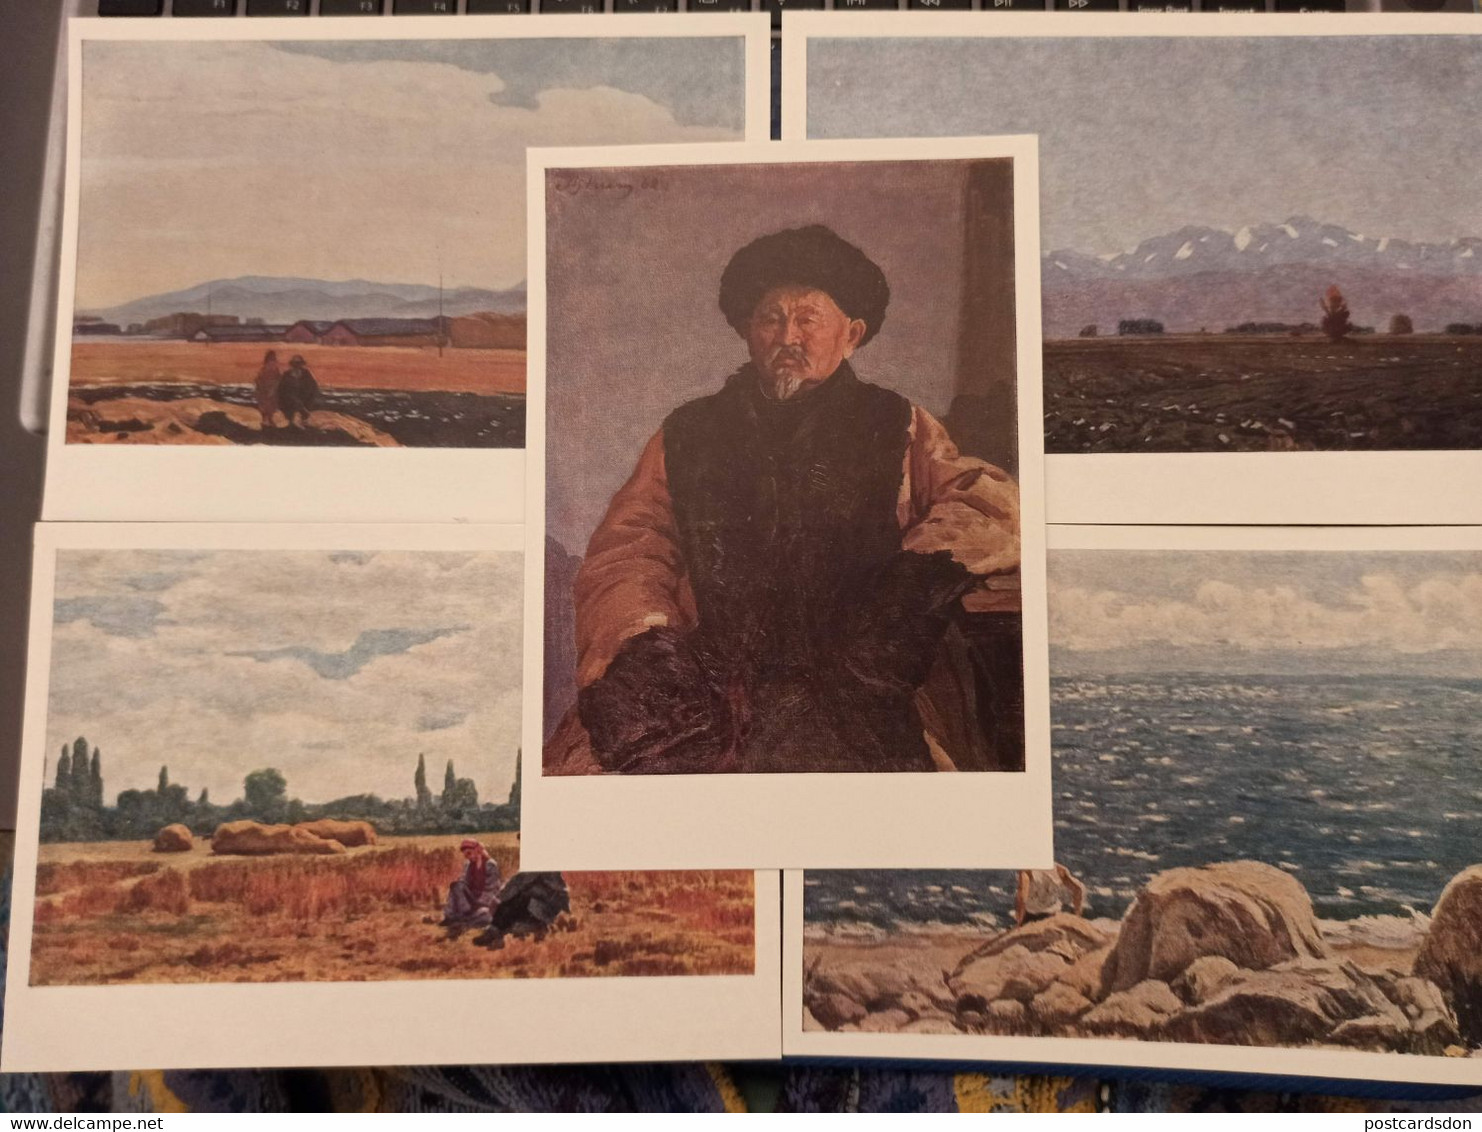 Kyrgyzstan. "KIRGIZIA" IN ART By Gapar Aitiev  - Old USSR PC Set  - 1967  - 11 Postcards - Kyrgyzstan